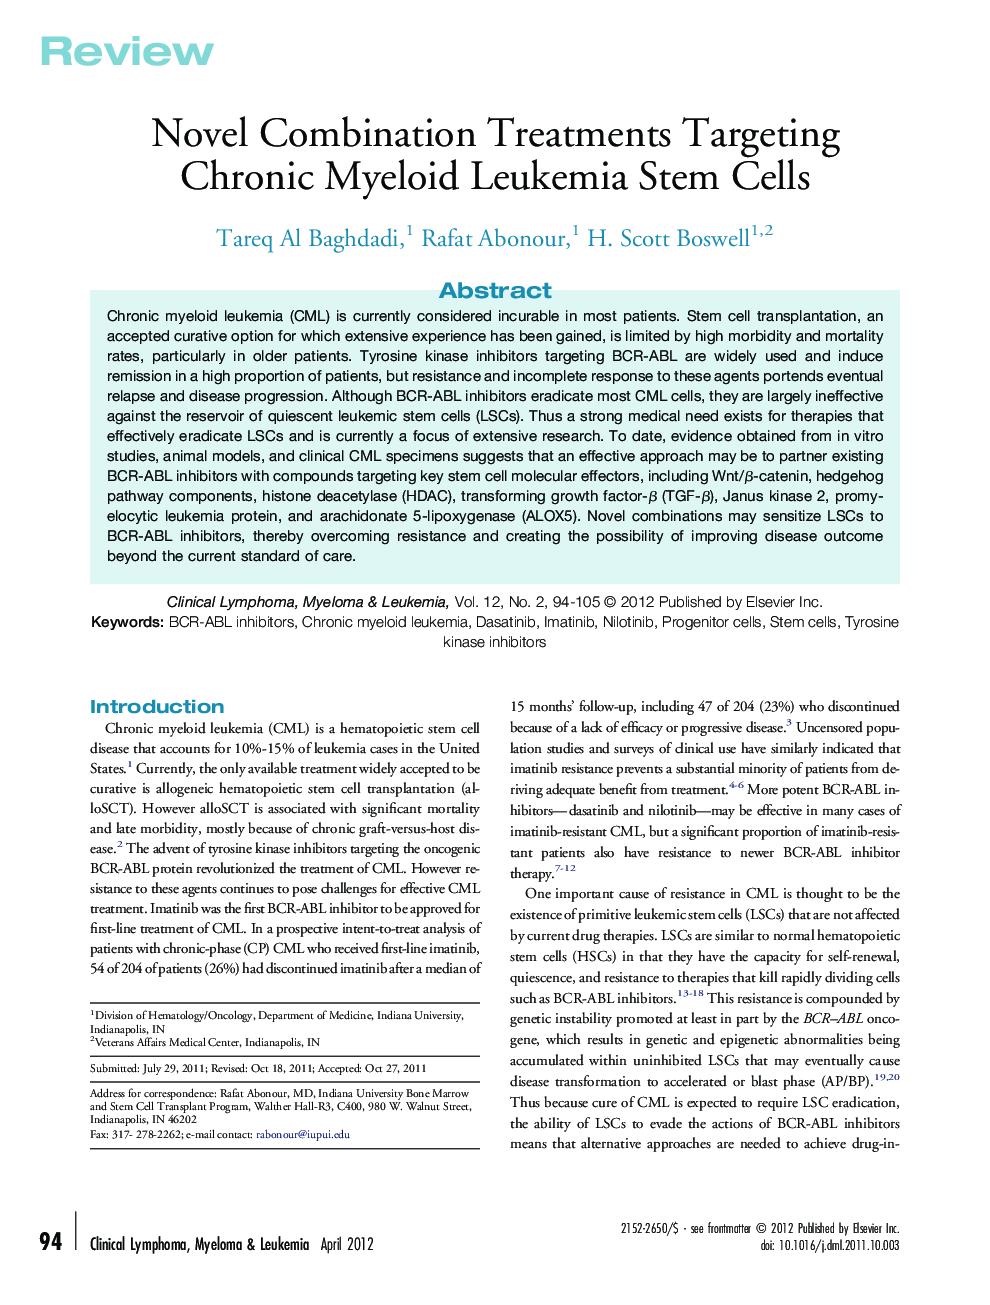 Novel Combination Treatments Targeting Chronic Myeloid Leukemia Stem Cells